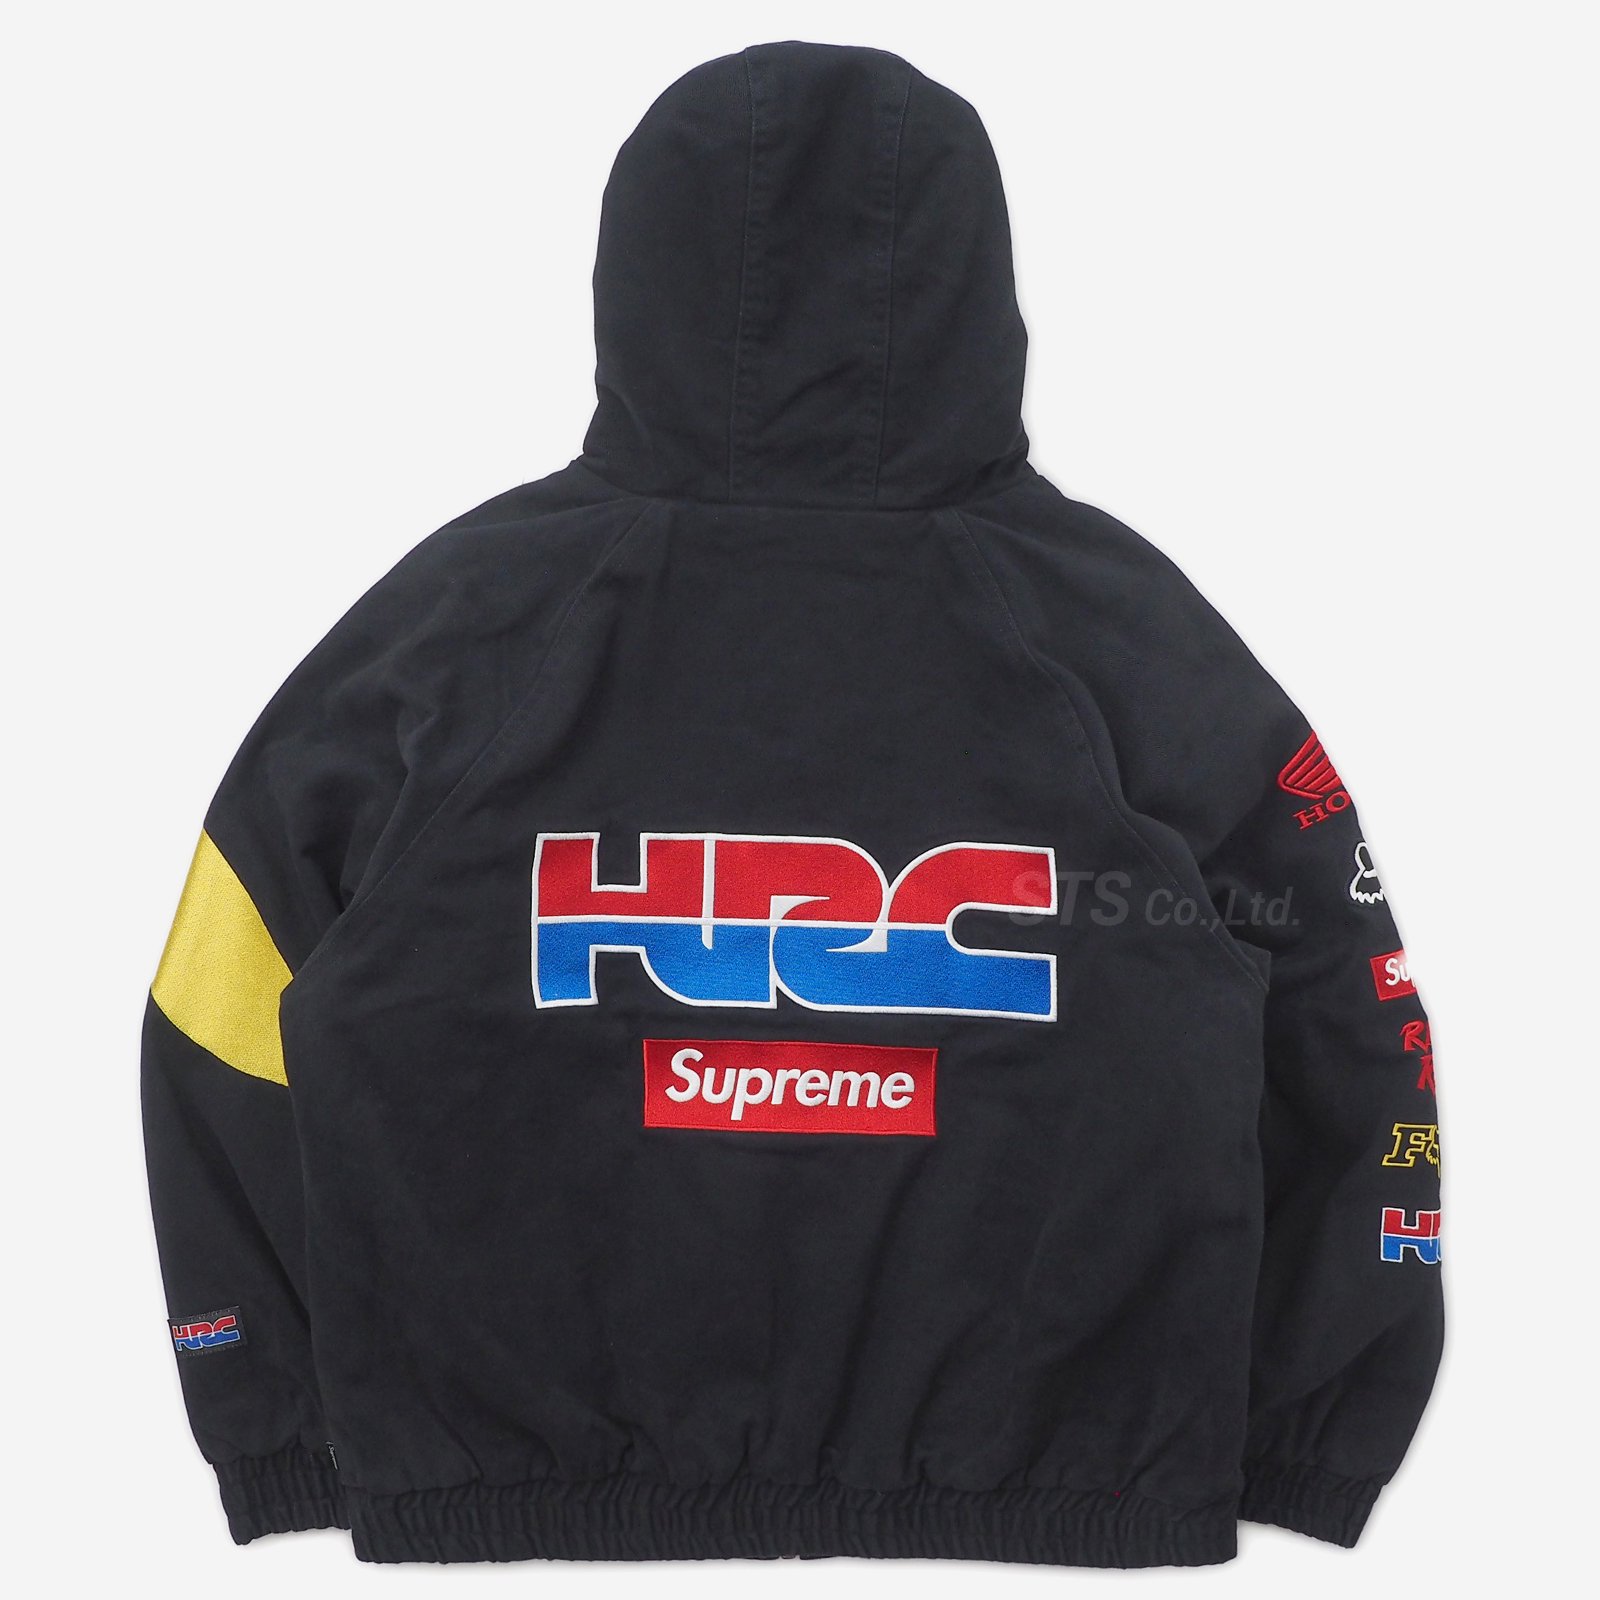 Supreme/Honda/Fox Racing Puffy Zip Up Jacket - UG.SHAFT